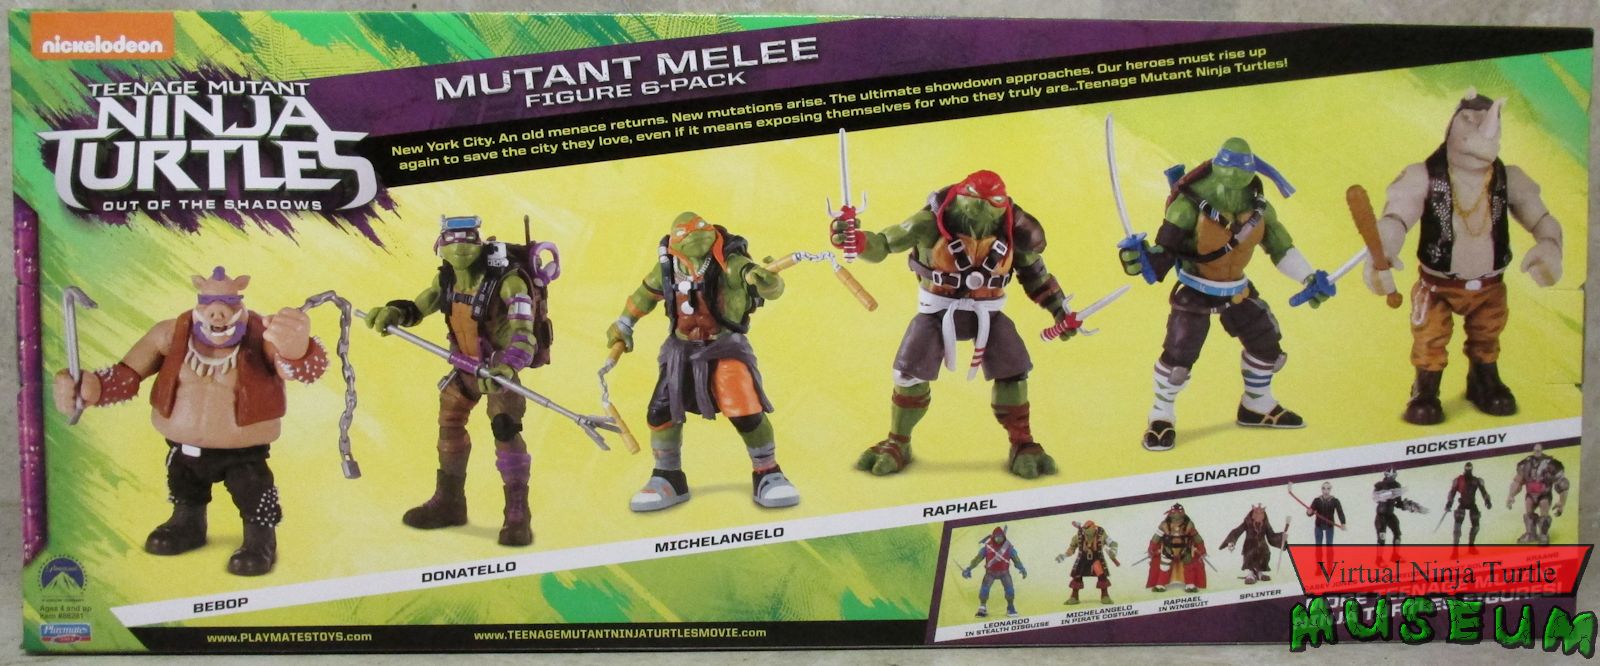 Mutant Melee box set rear